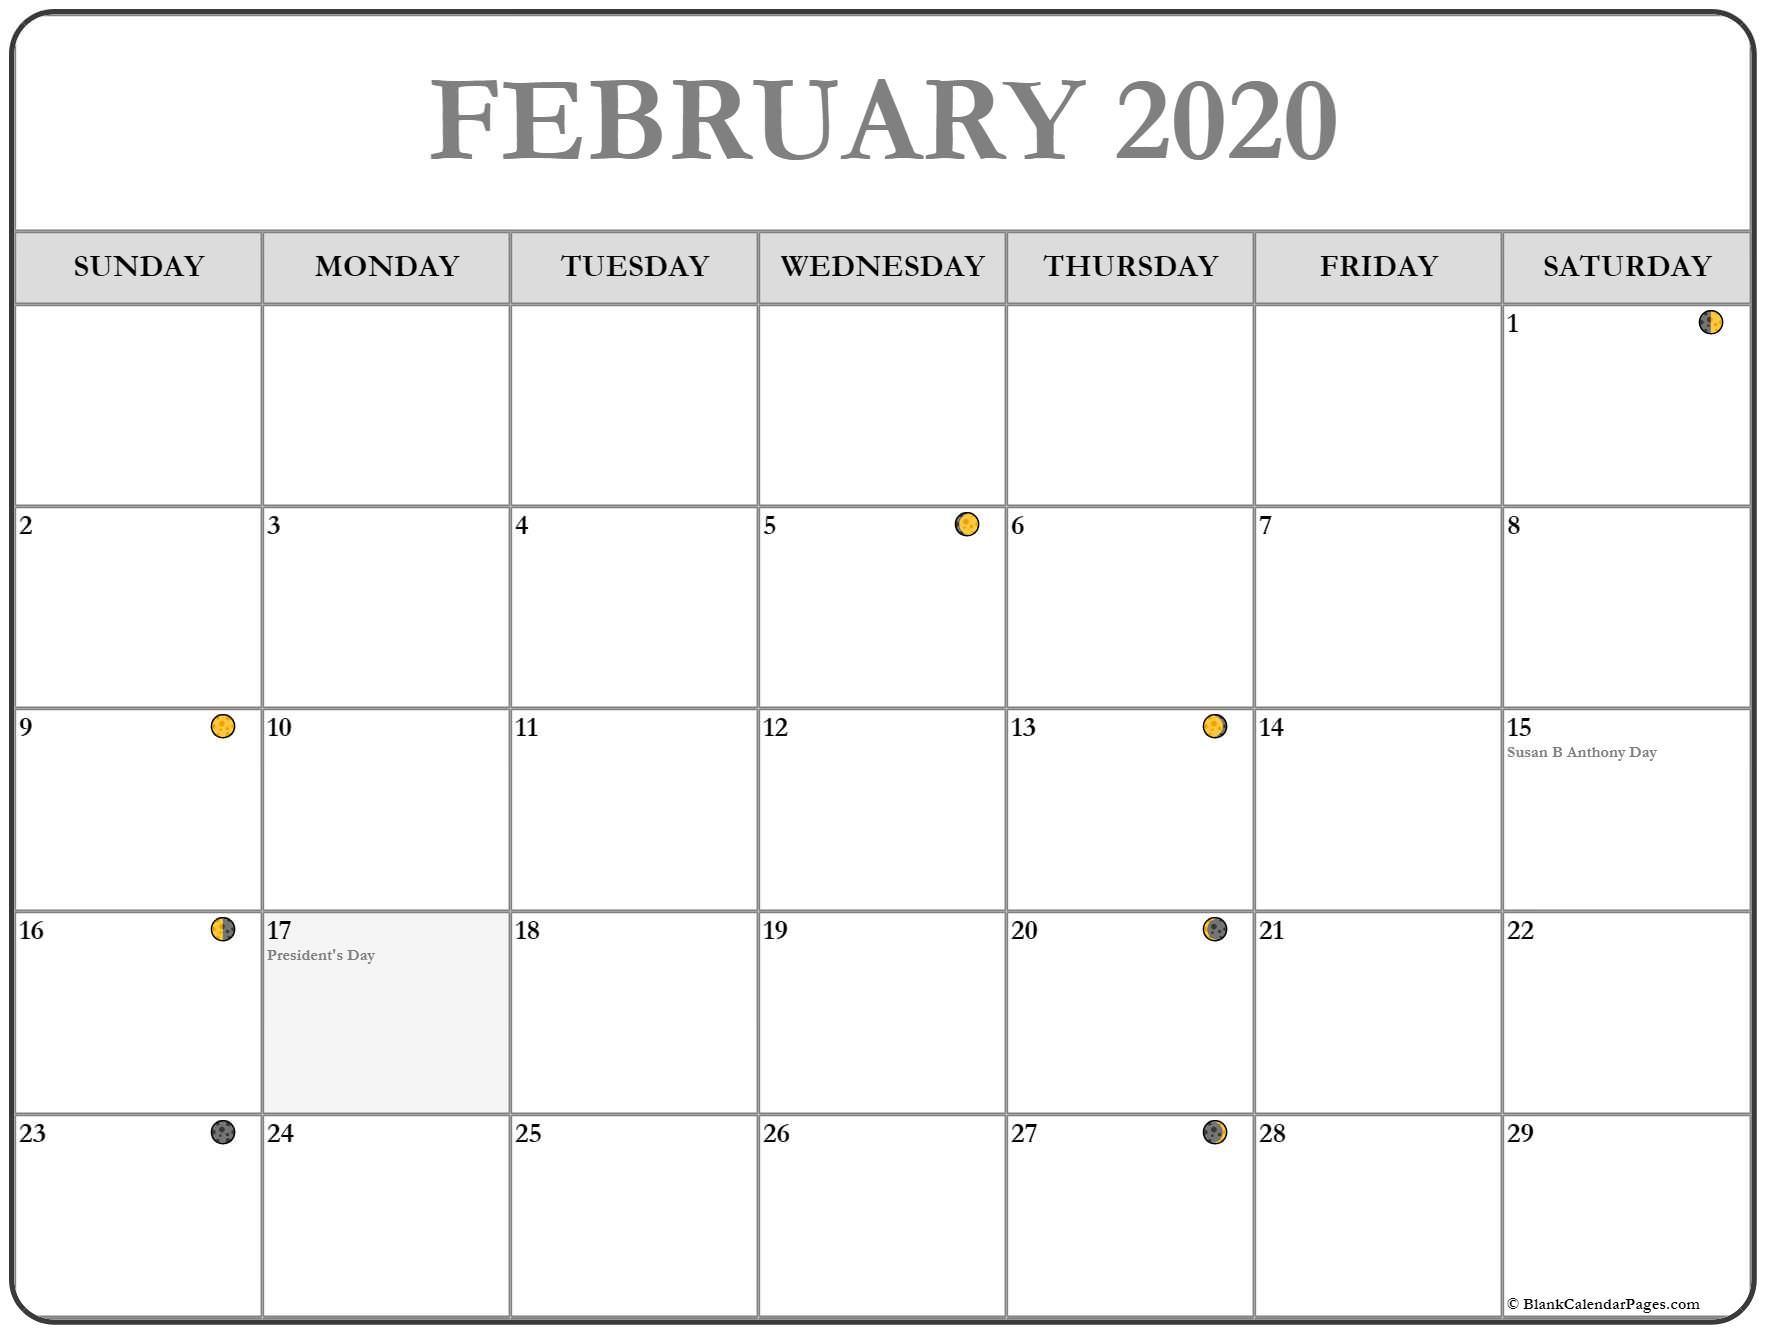 February 2020 Printable Lunar Calendar | Moon Phase Calendar